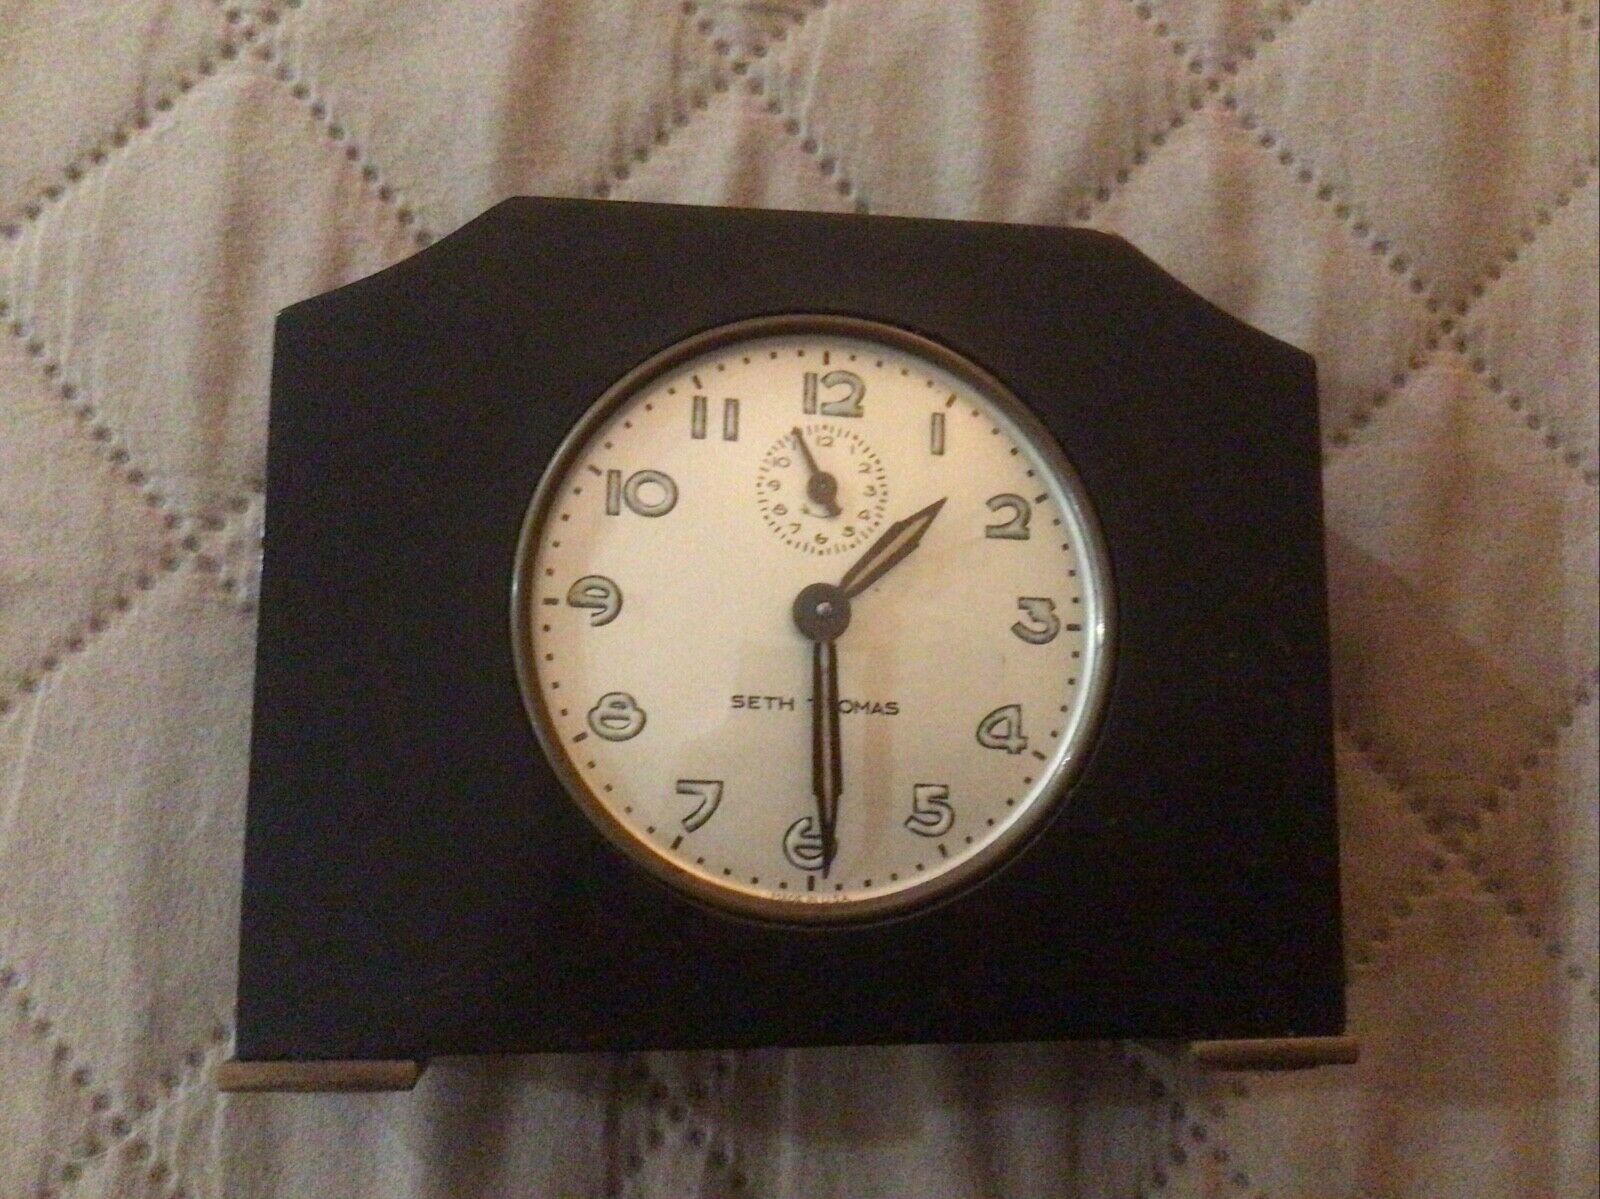 Vintage Art Deco Seth Thomas black Bakelite with Gold Swirl Desk Alarm Clock